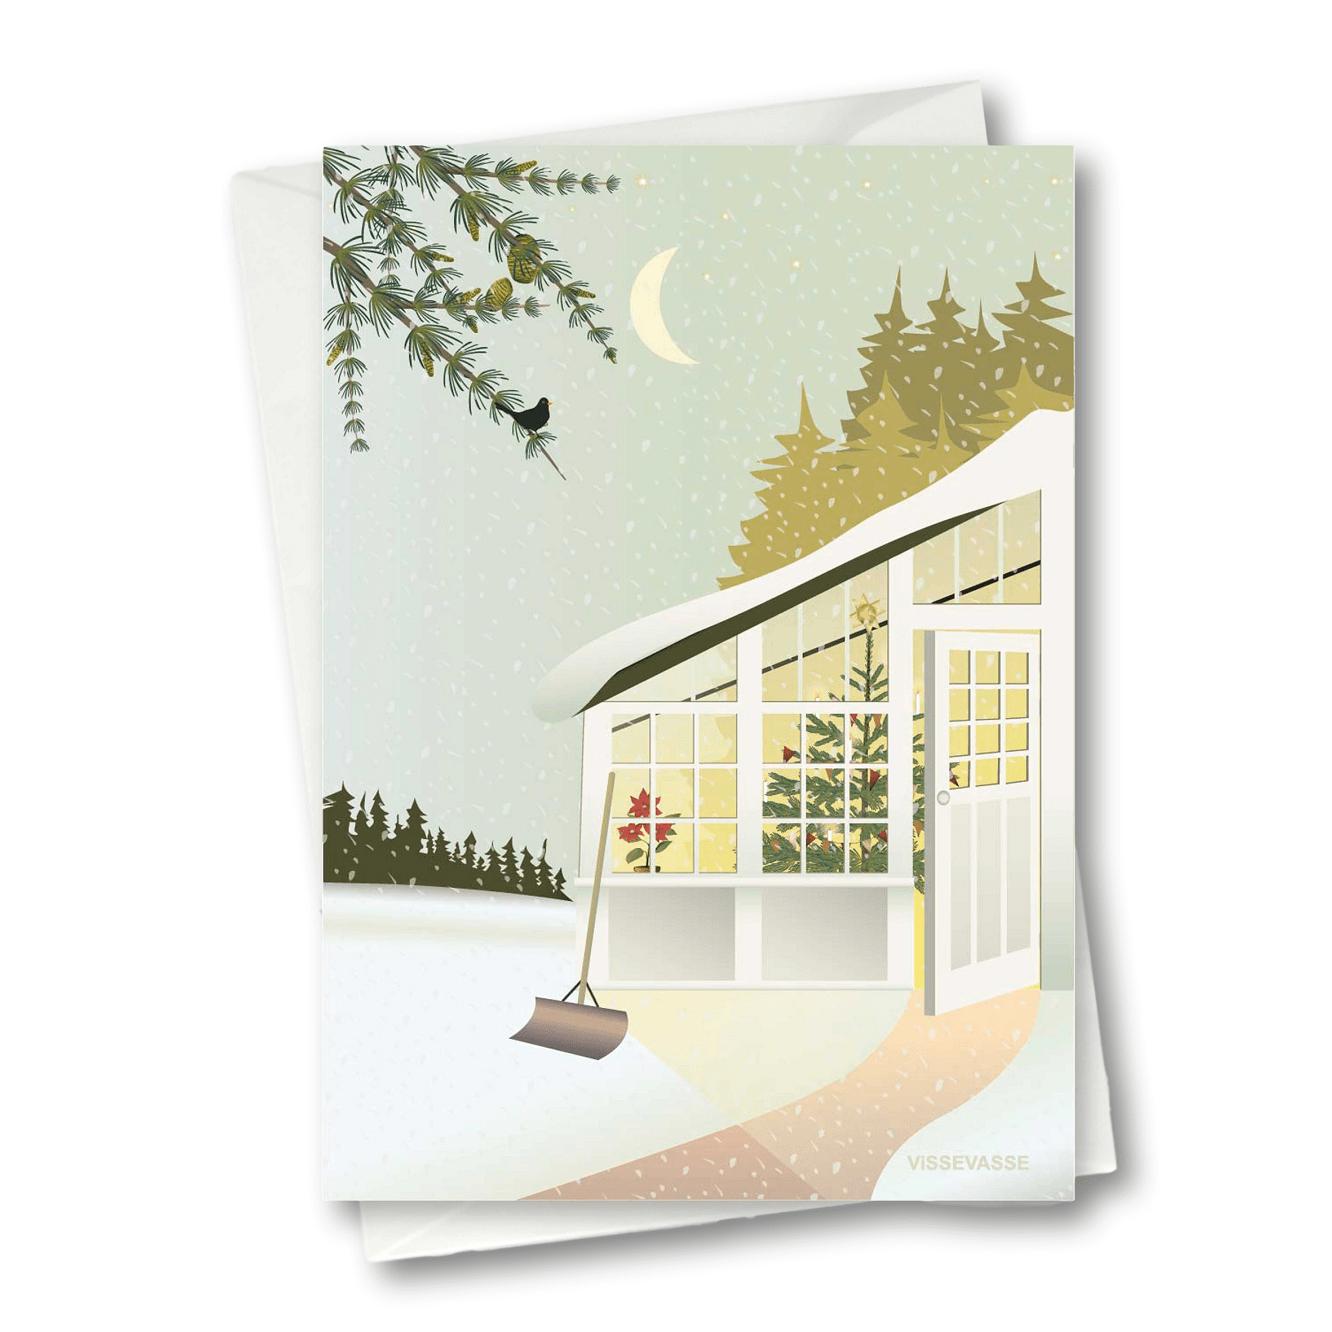 Vissevasse Jul i Greenhouse -gratulationskortet, 10,5x15 cm